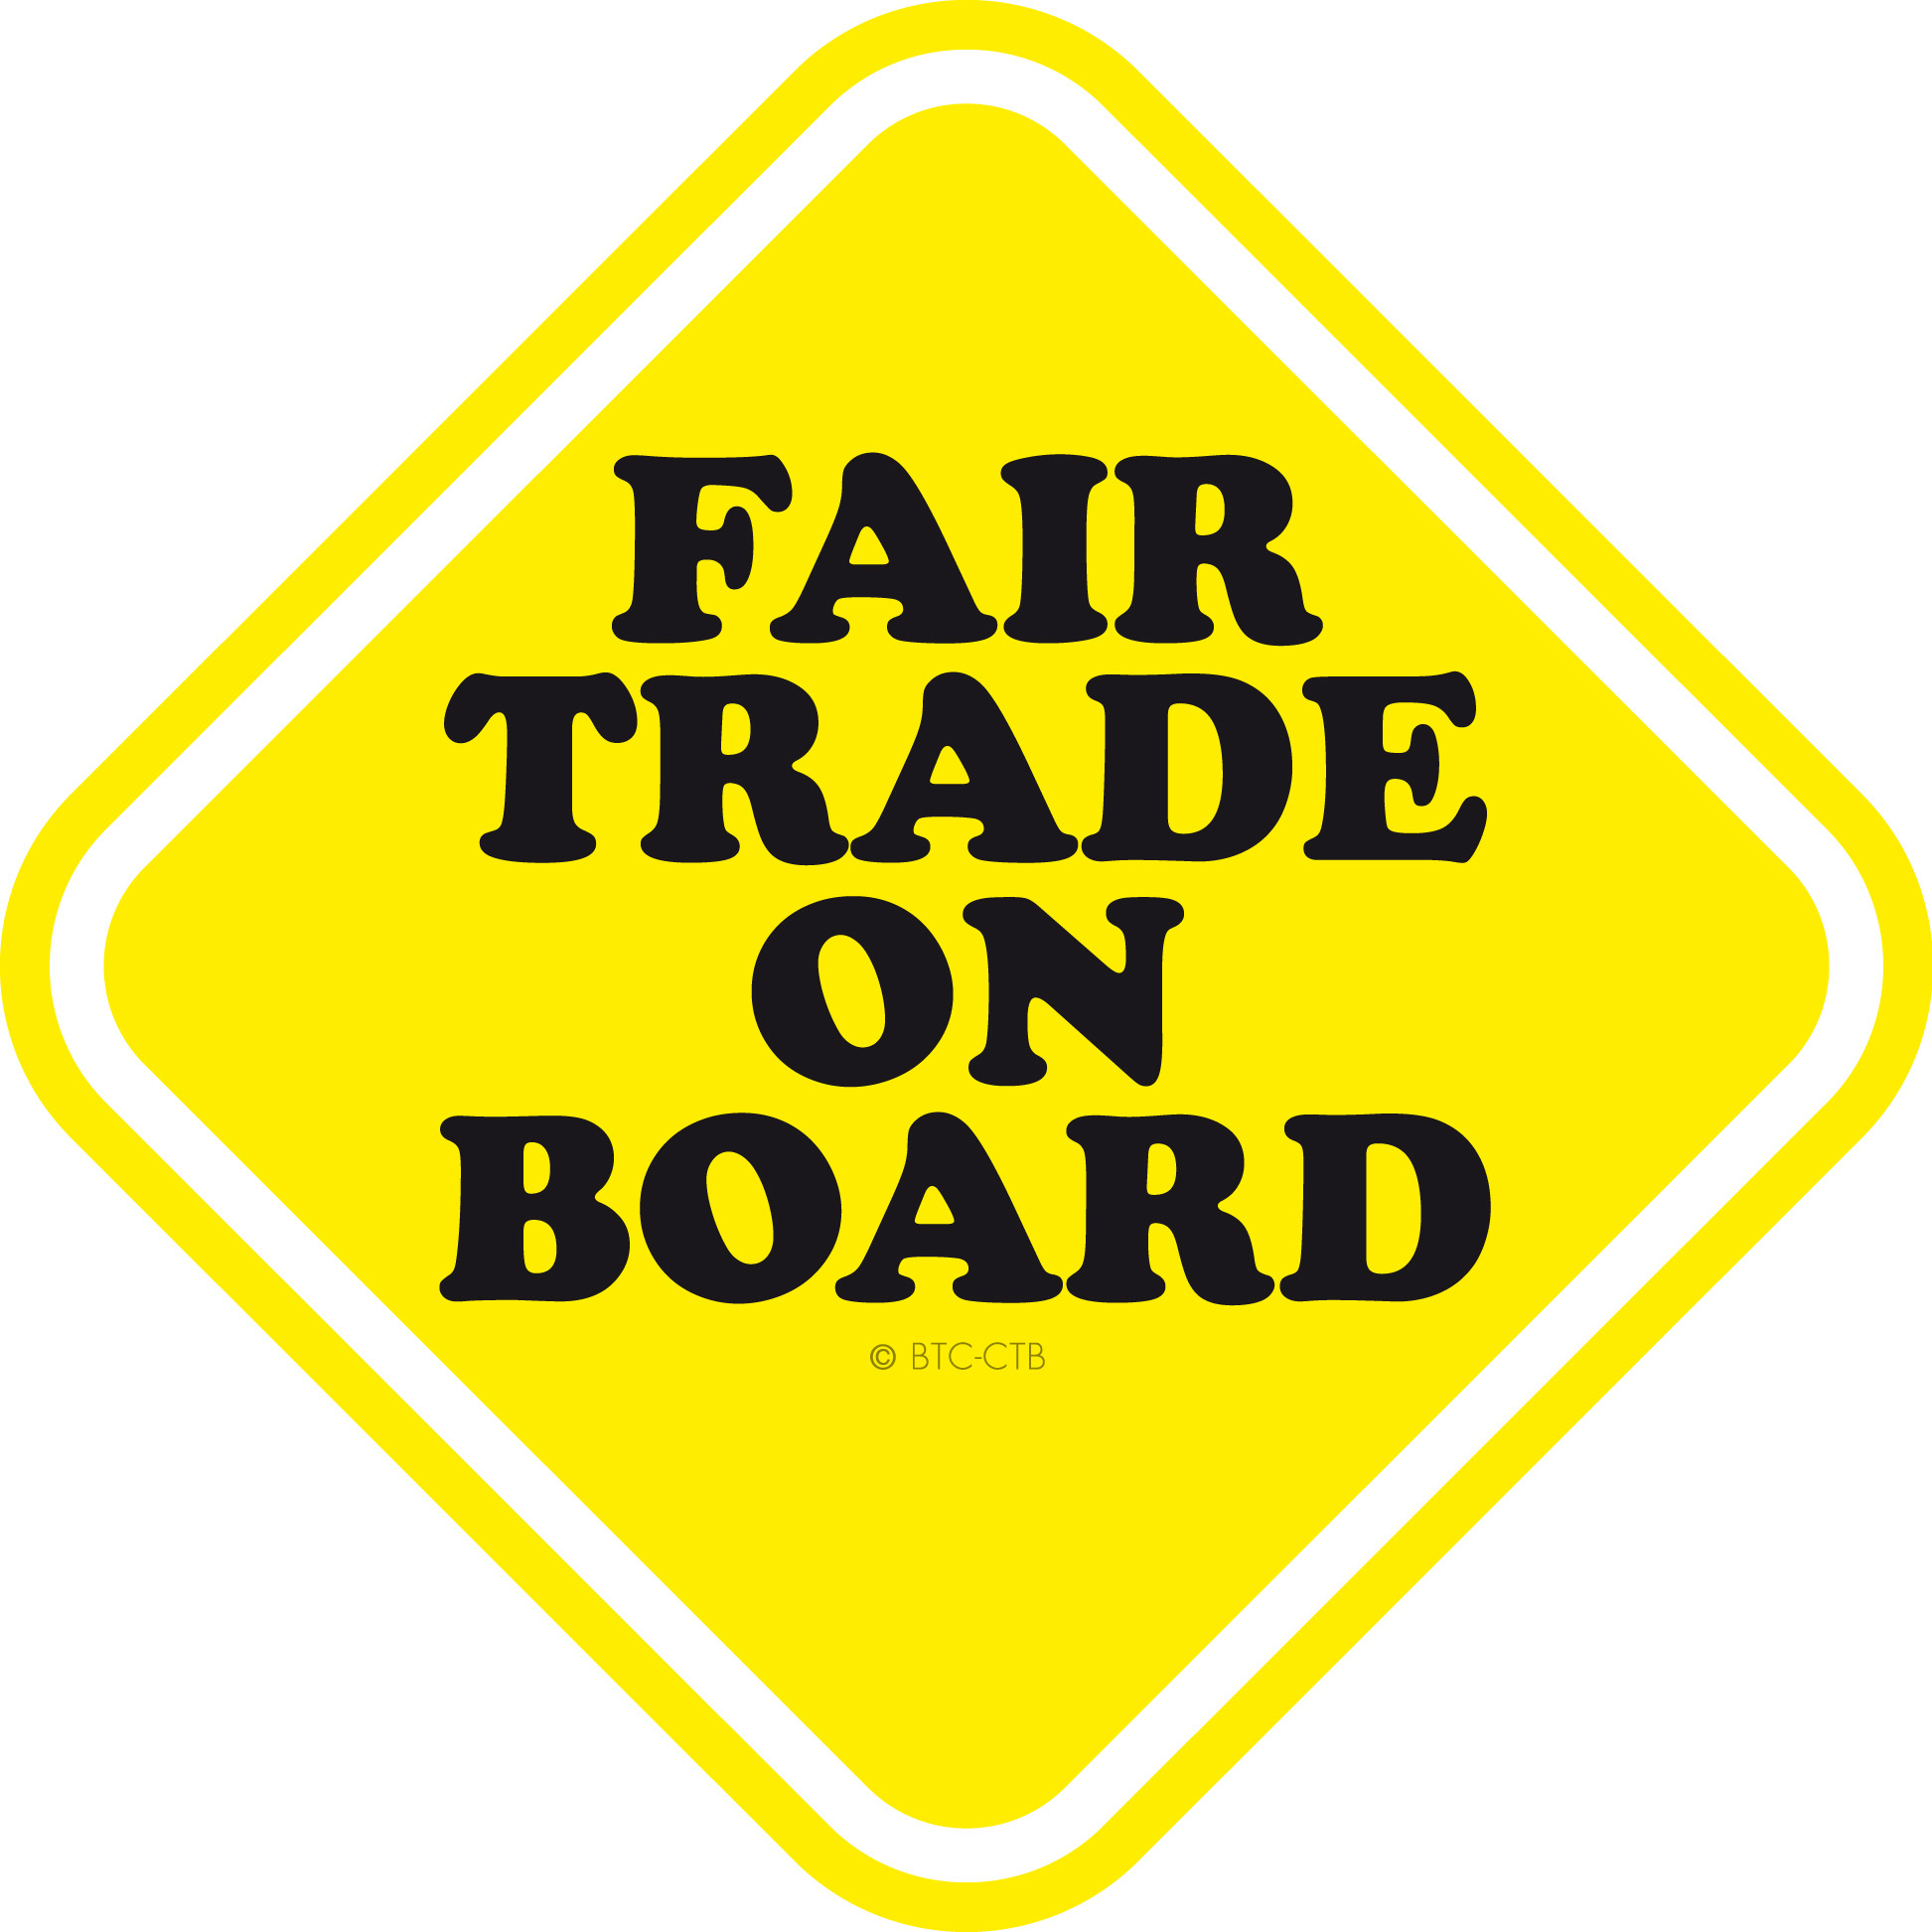 Fairtrade on board 